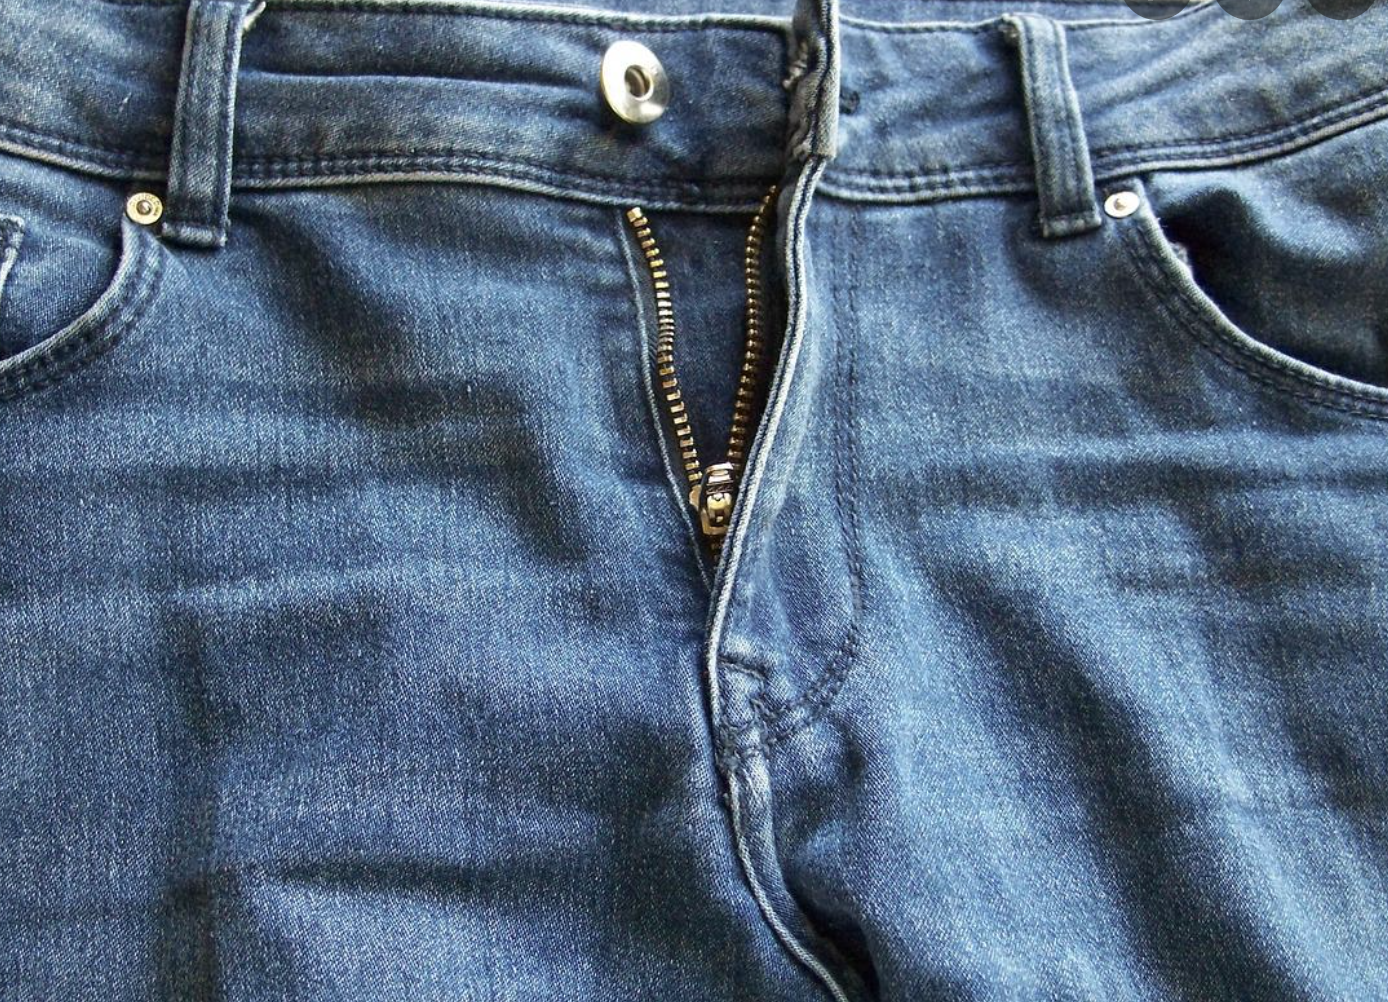 Jeans zipper